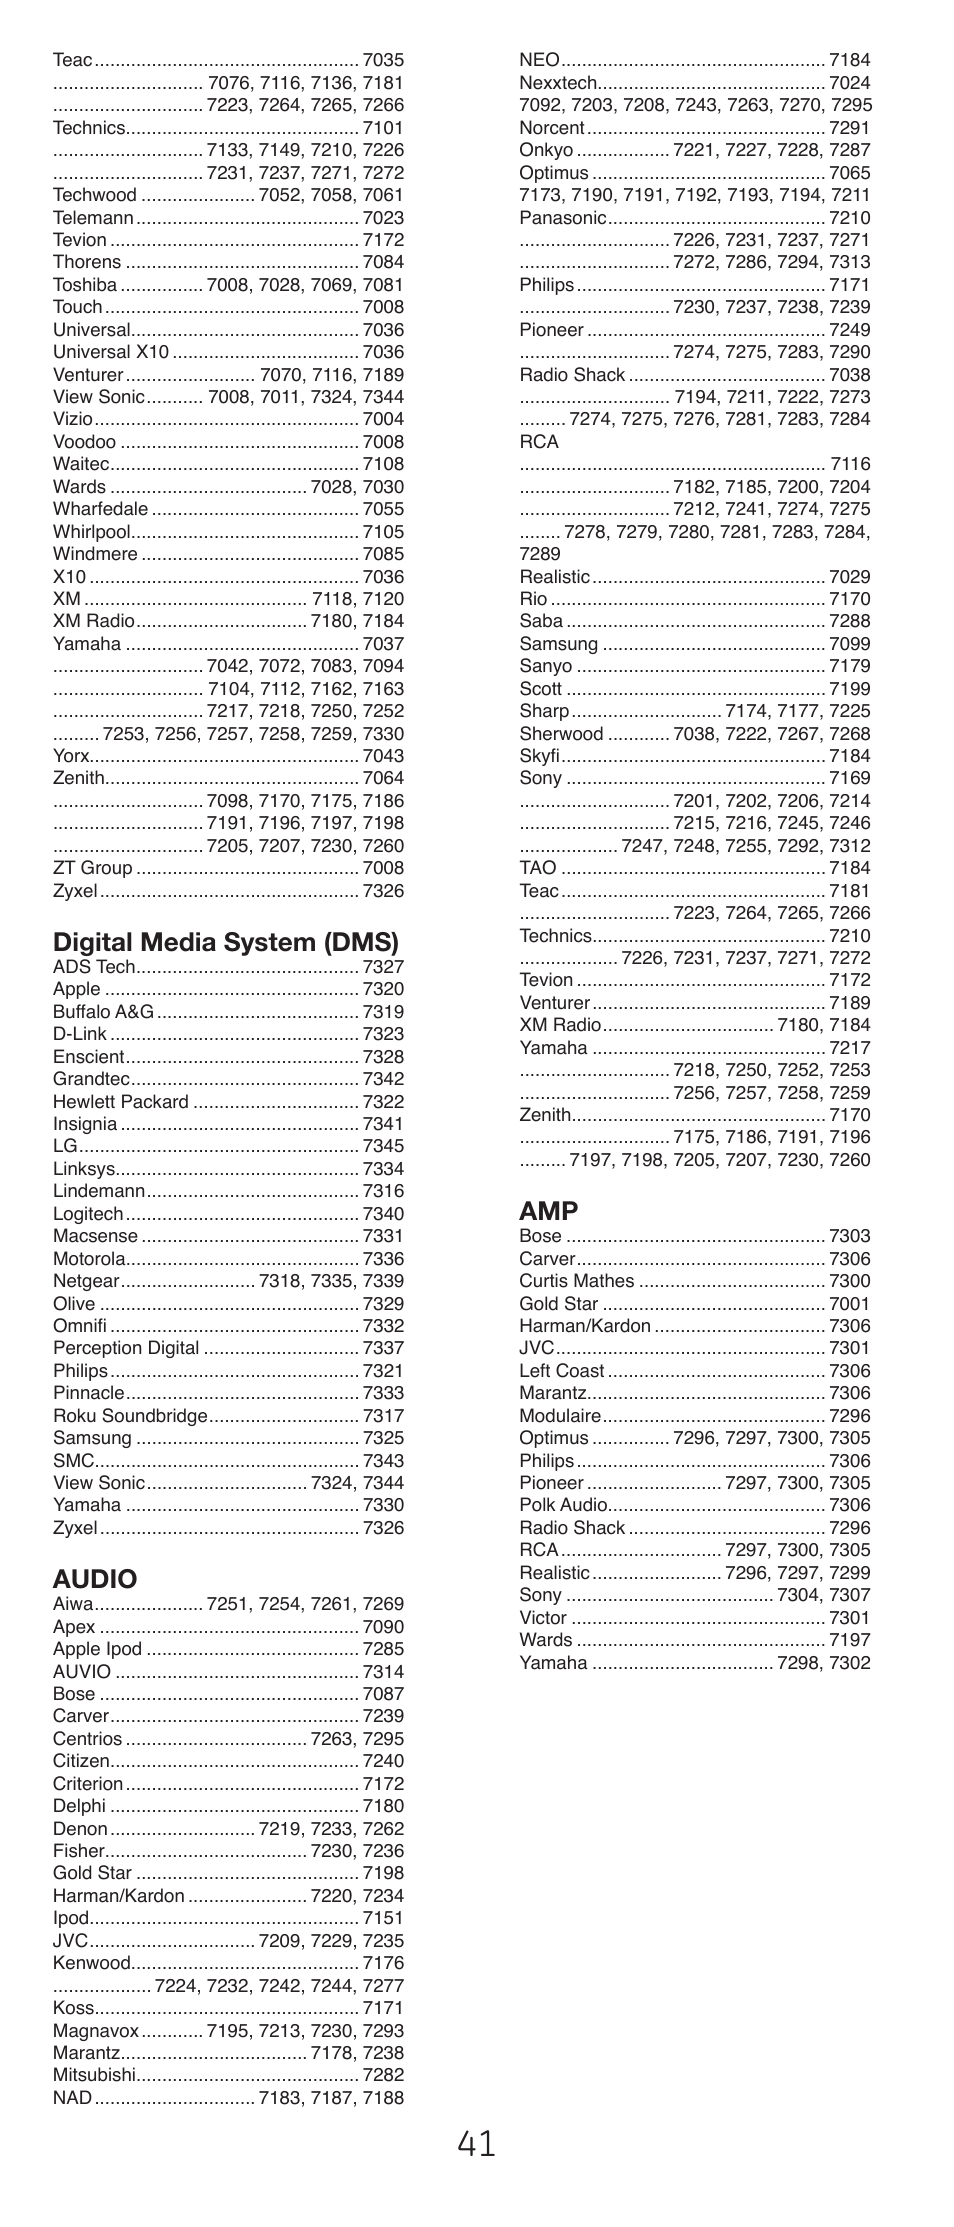 Digital media system (dms), Audio | GE 24927-v2 GE Universal Remote